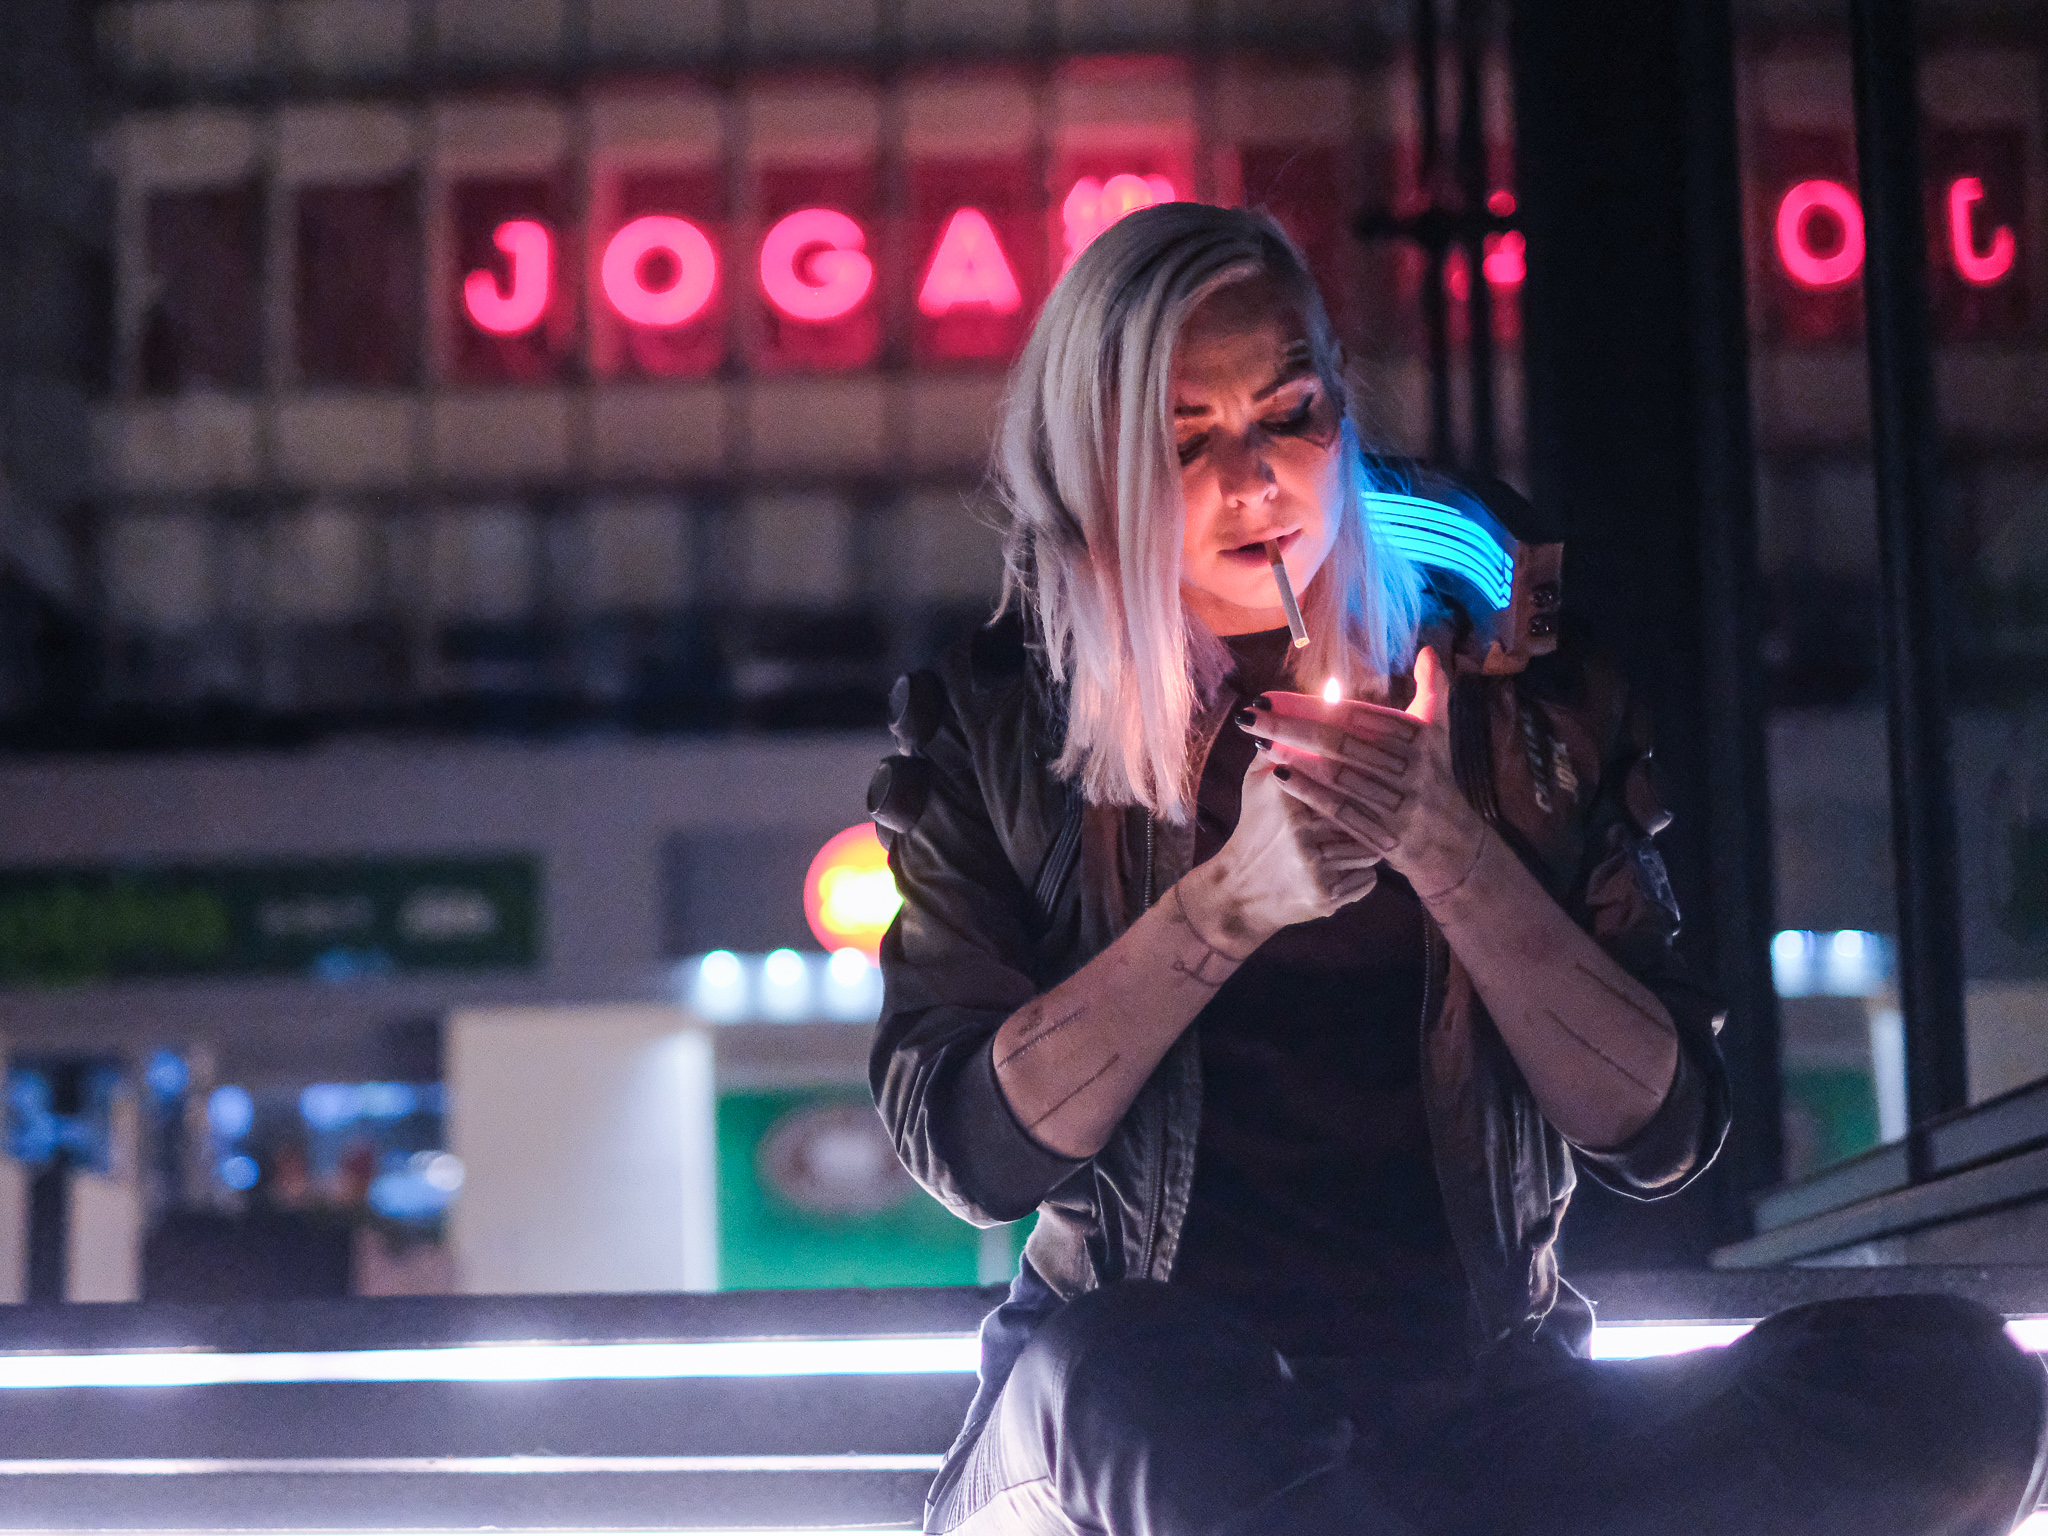 Cyberpunk 2077 - V Cosplay - alzbeta trojanova lighting a cigarette